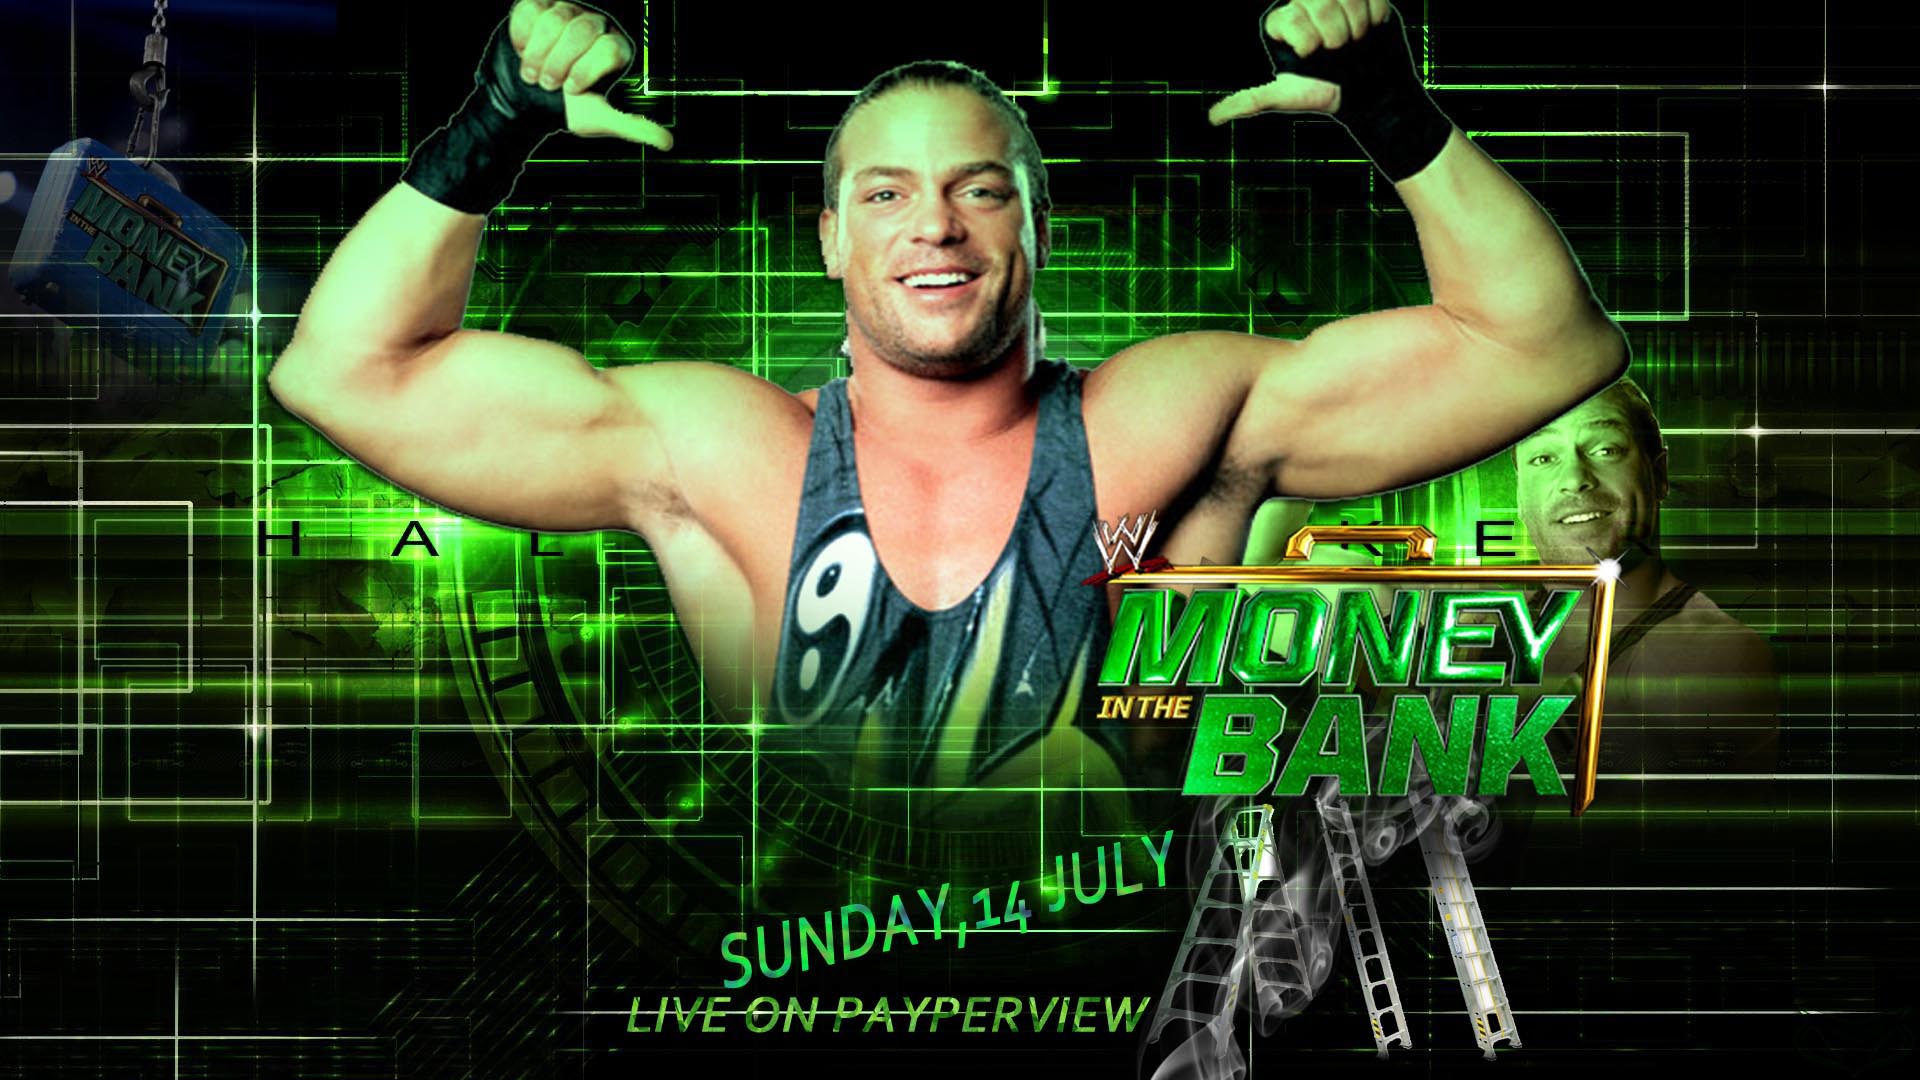 WWE Wrestler RVD 2014 HD Wallpaper